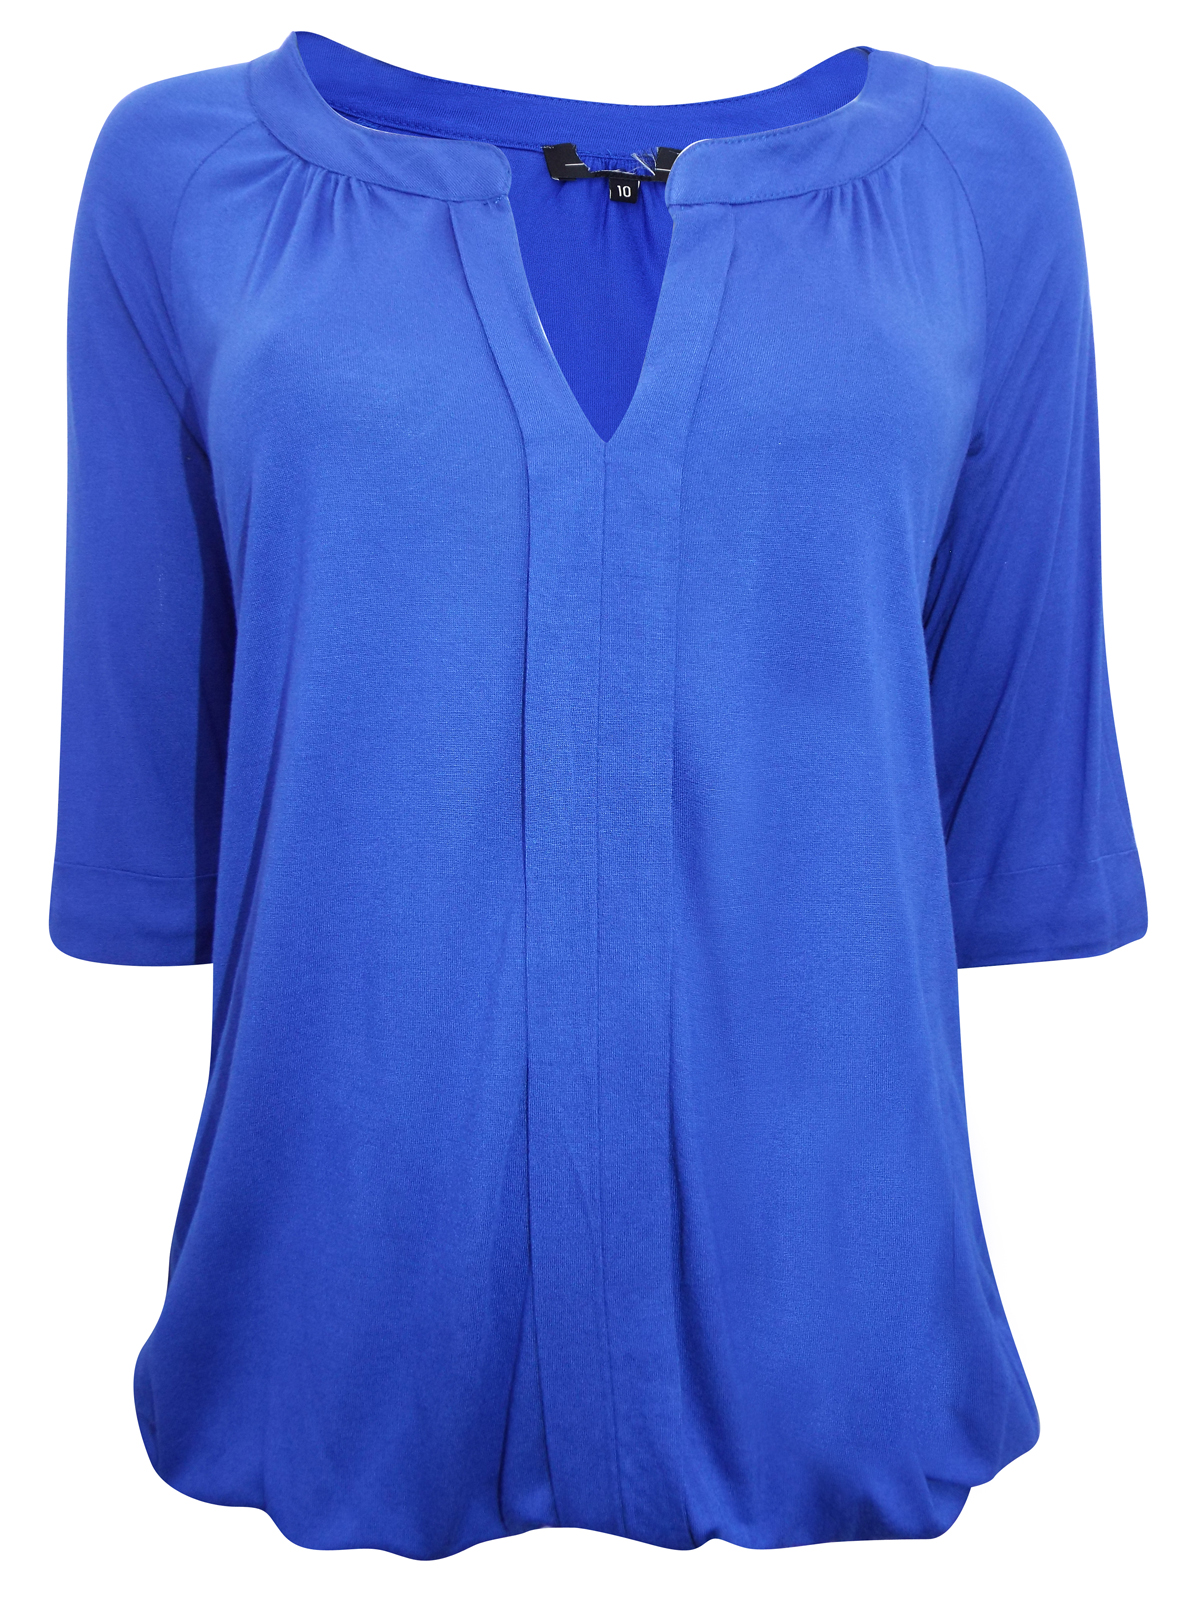 Matalan - - BLUE Notch Neck Elastic Hem Jersey Top - Size 8 to 20